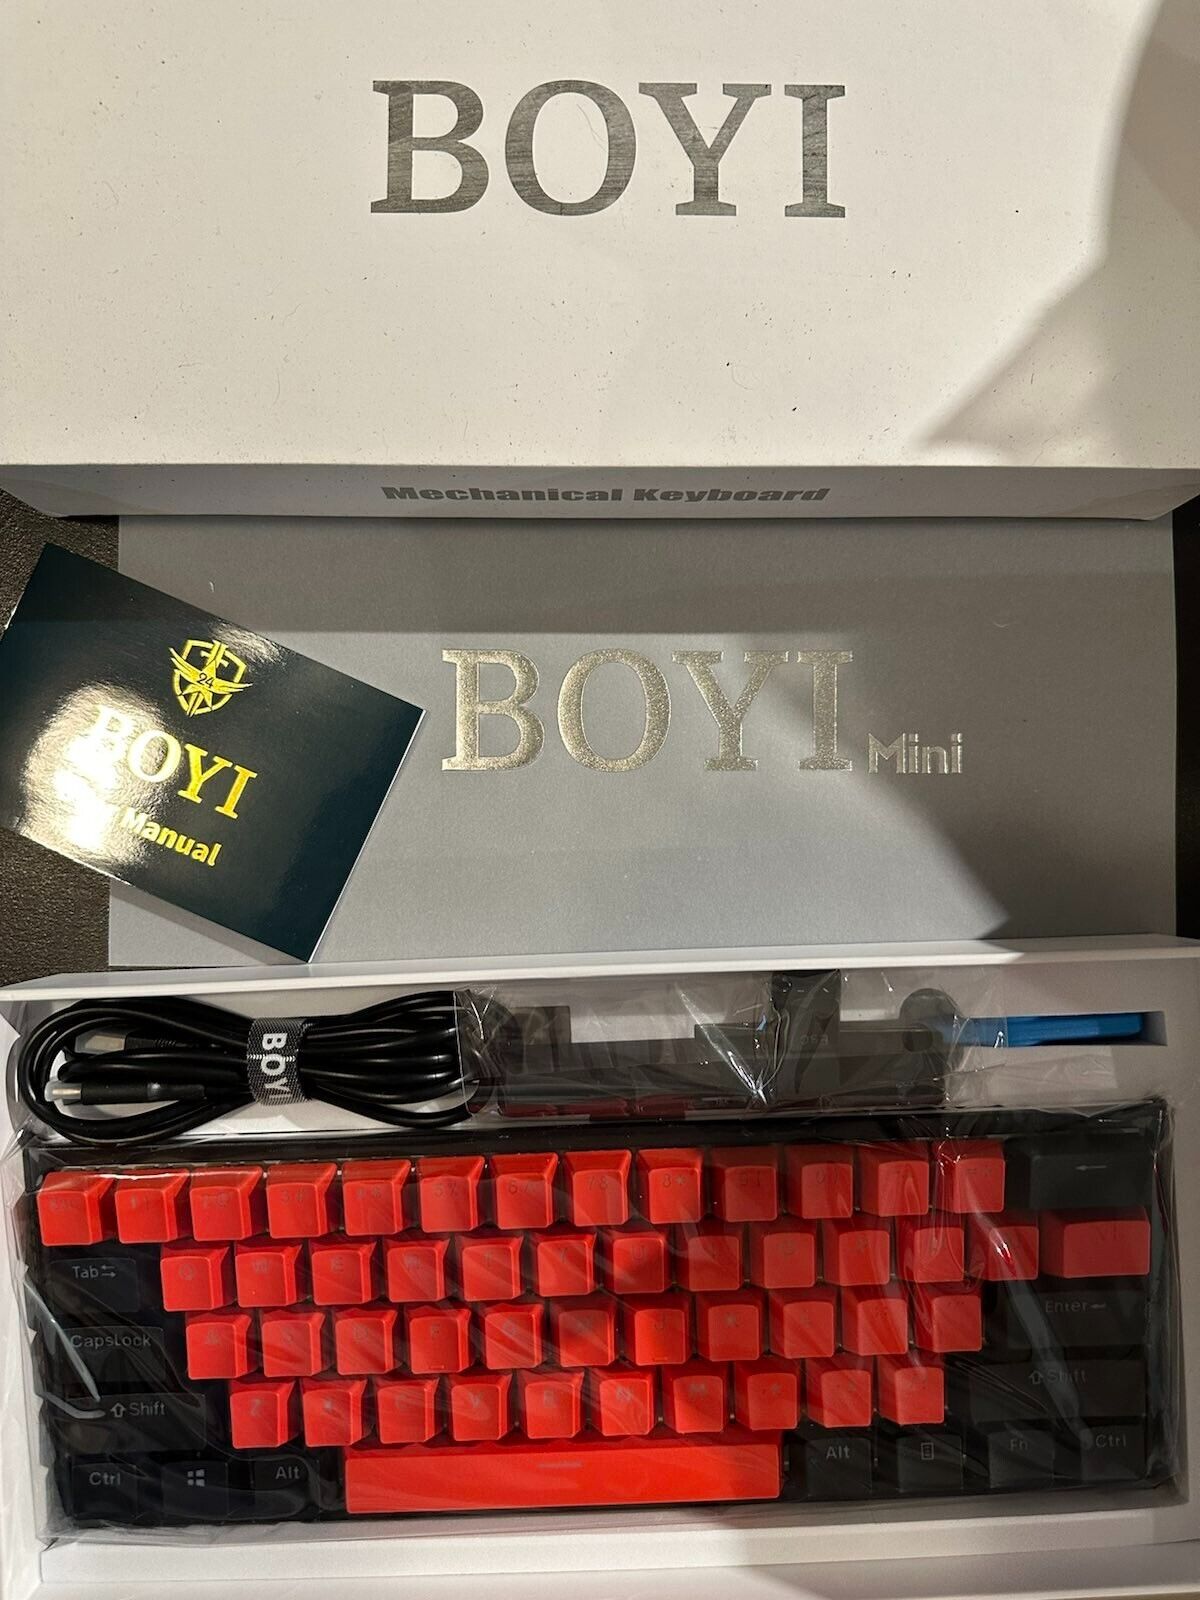 BOYI Wired 60% Mechanical Gaming Keyboard,61 Pro Mini RGB Tri-Mode PBT XDA 